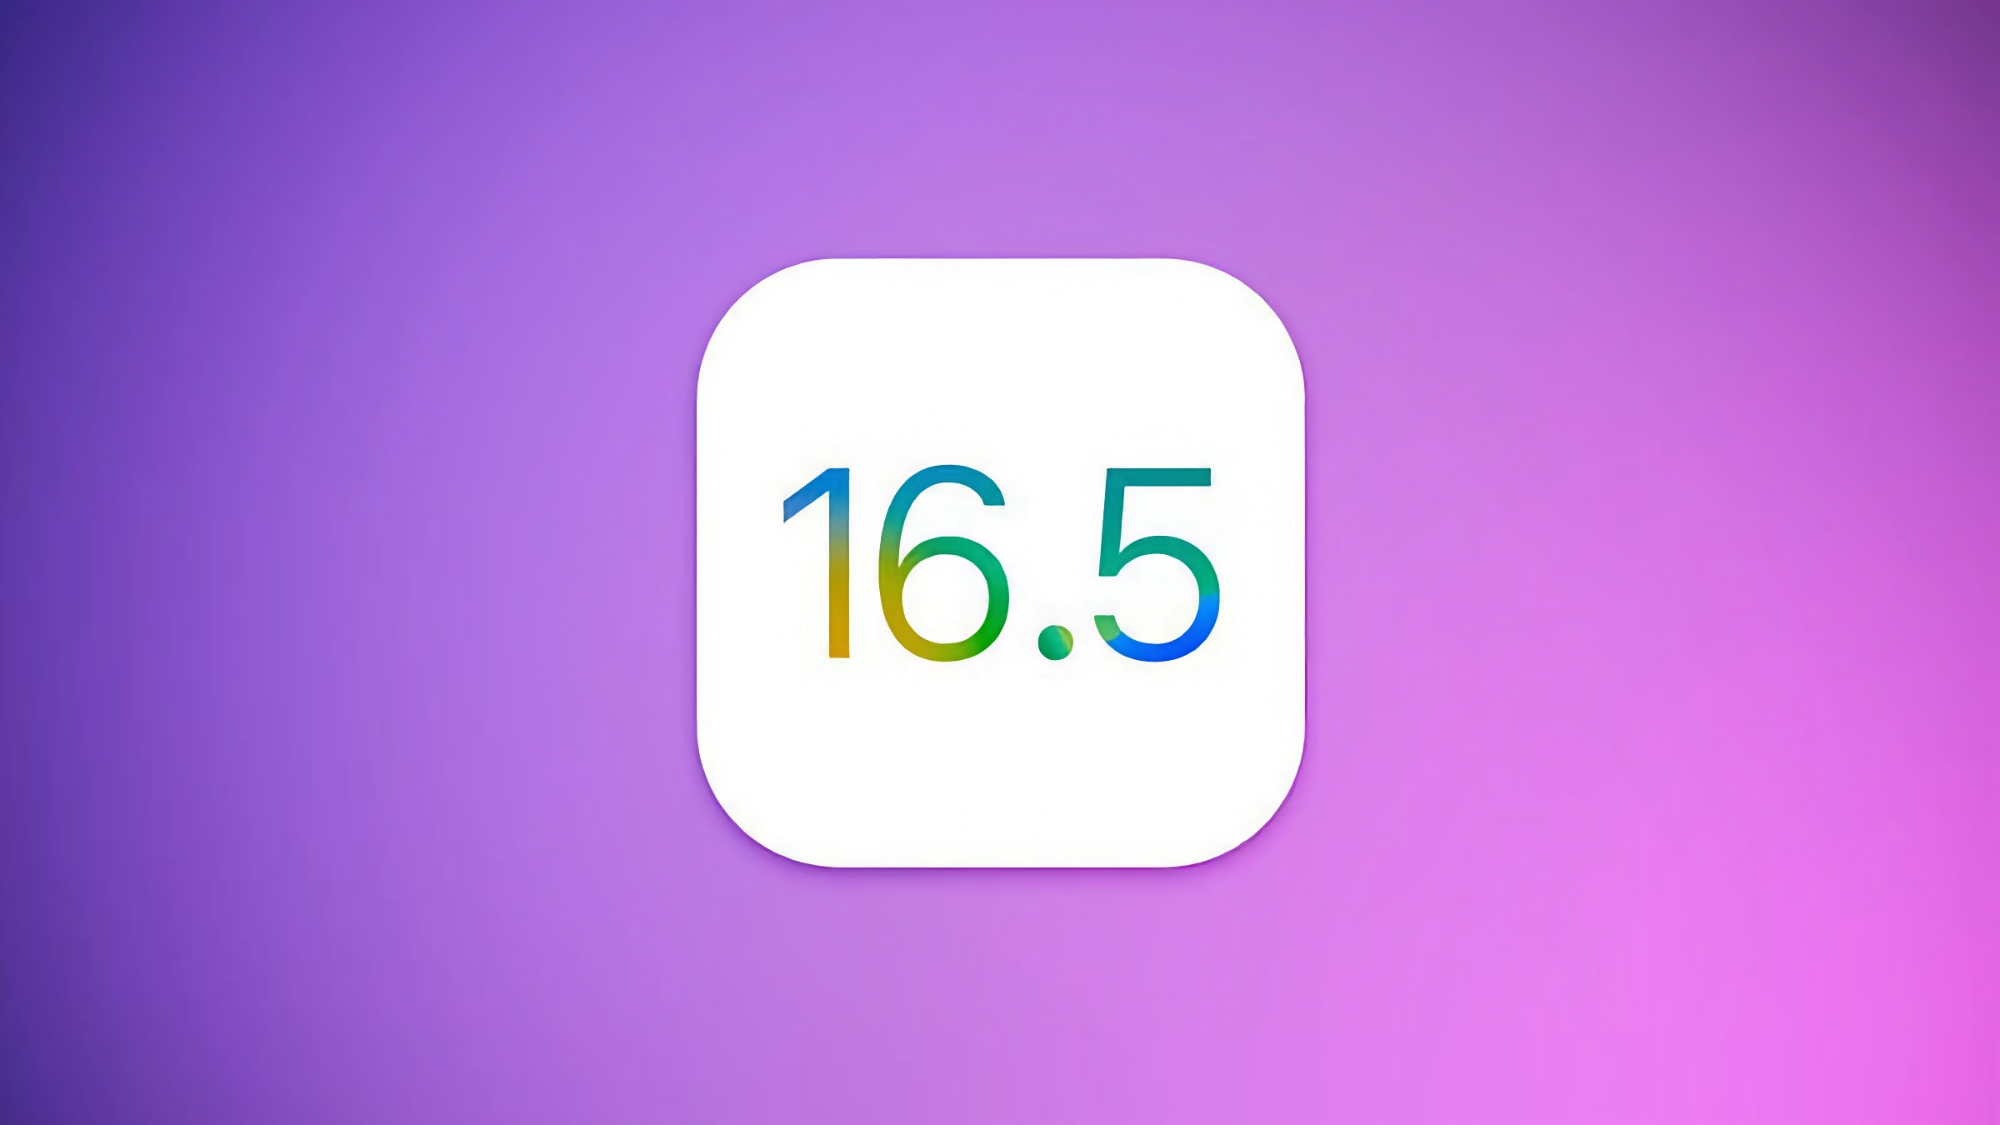 Apple releases third beta version of iOS 16.5